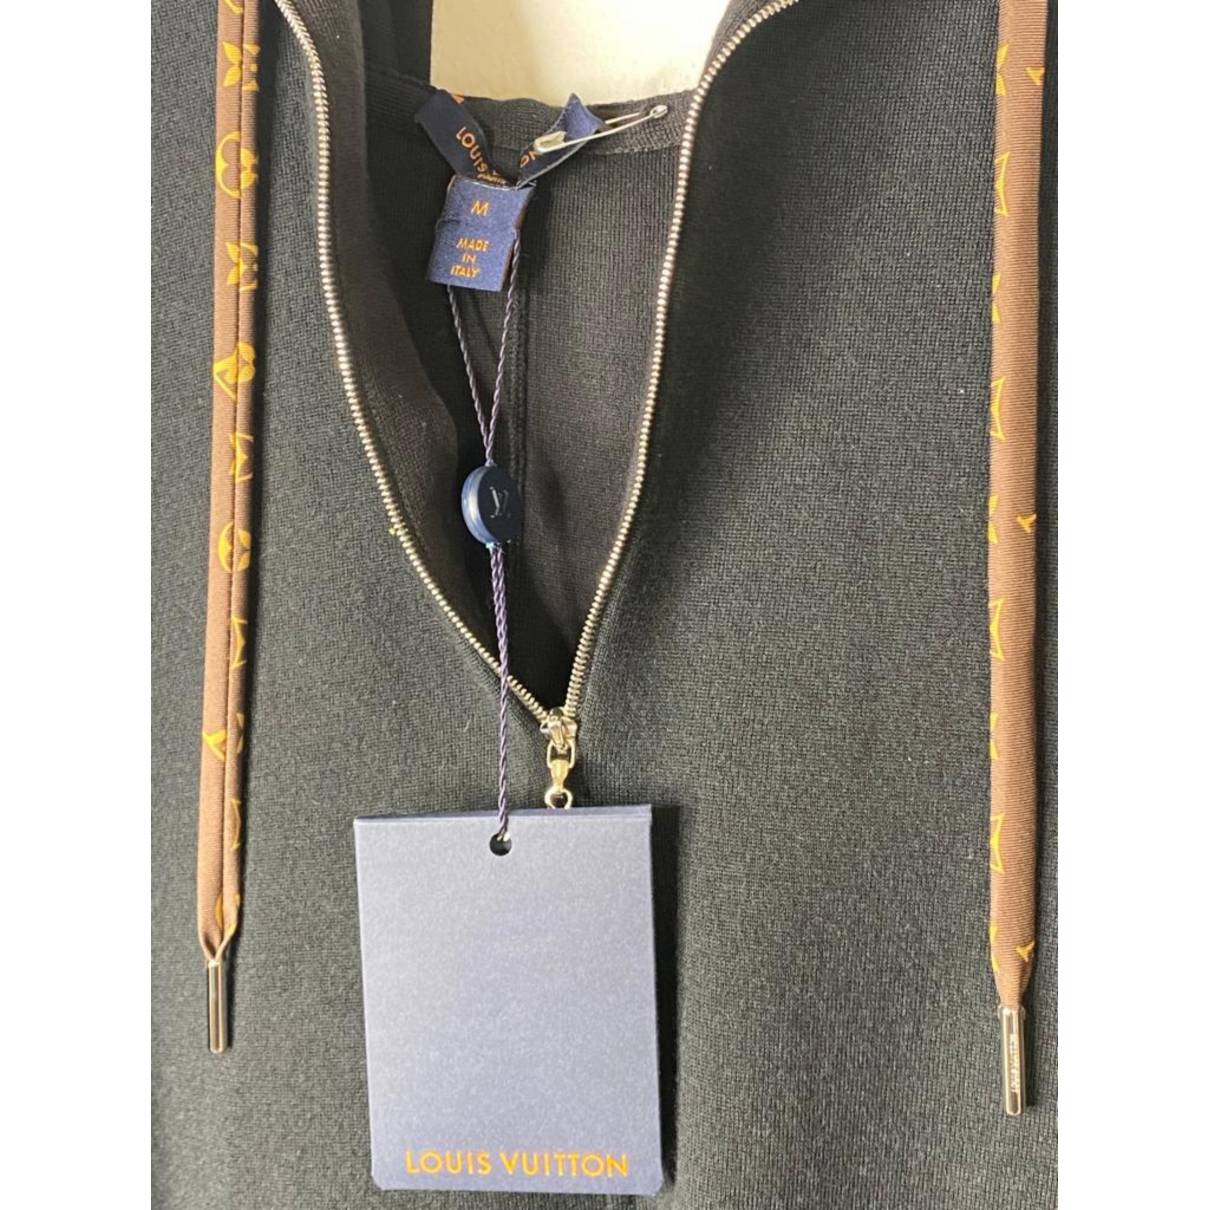 Louis Vuitton - Authenticated Jacket - Cashmere Black for Women, Good Condition